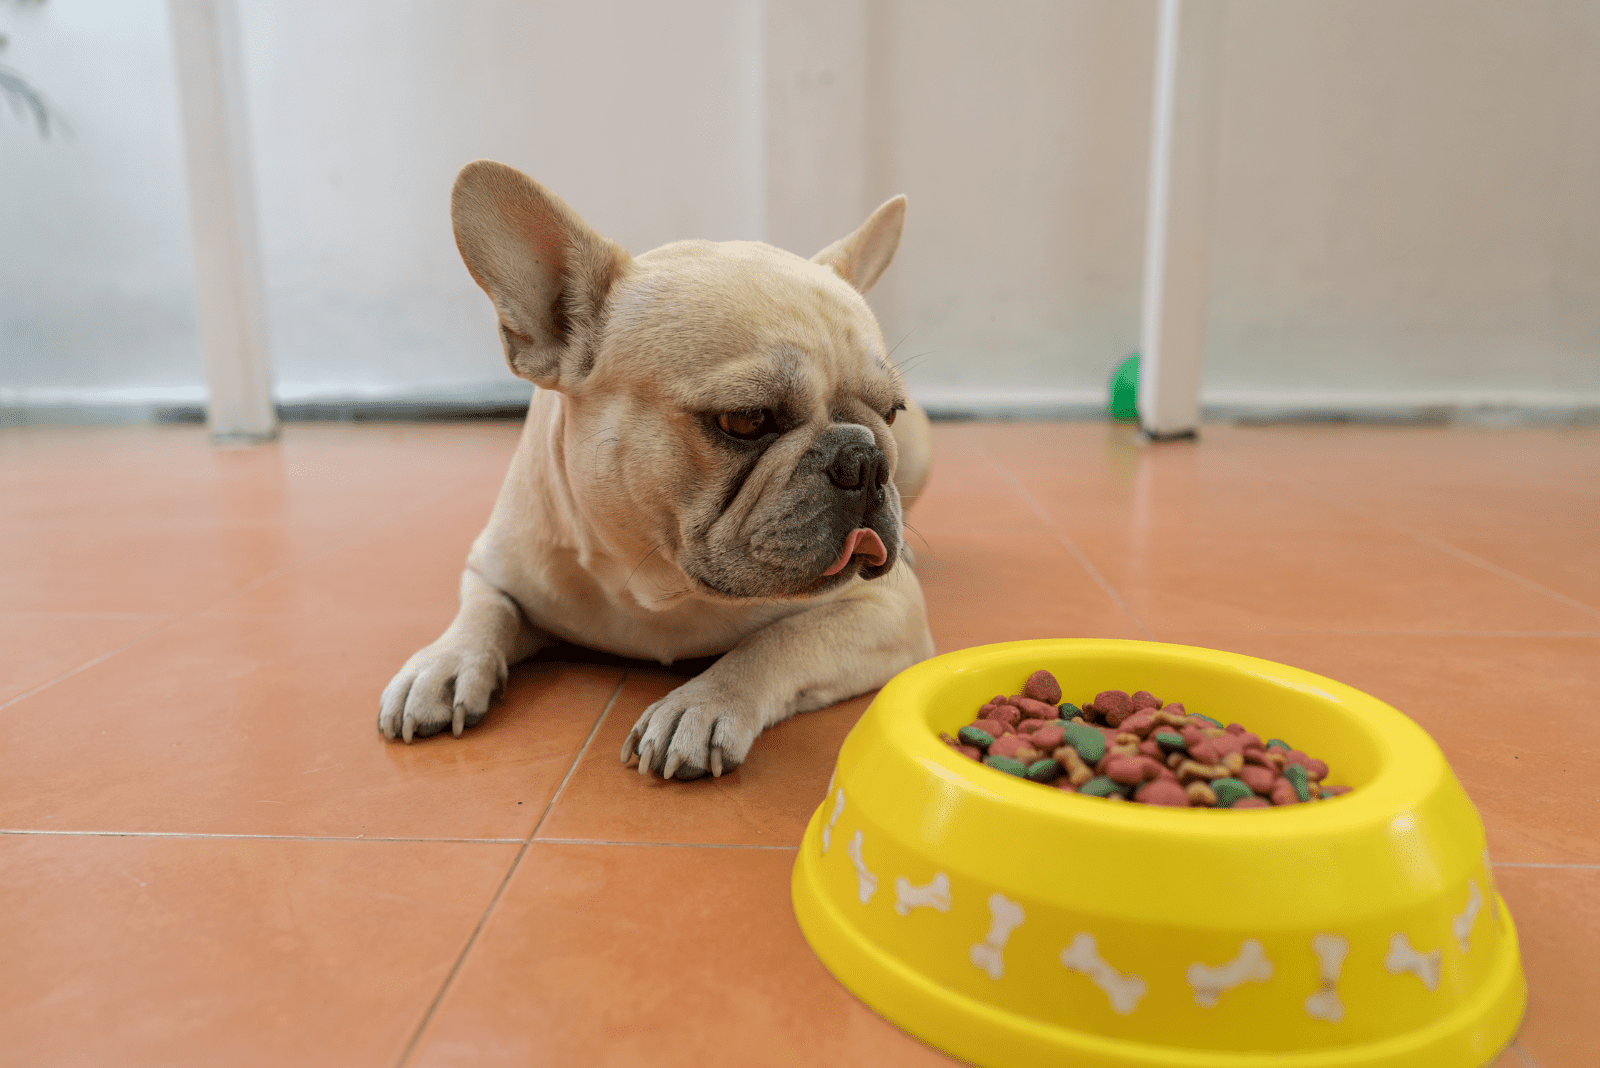 French Bulldog lies next to the food bowl